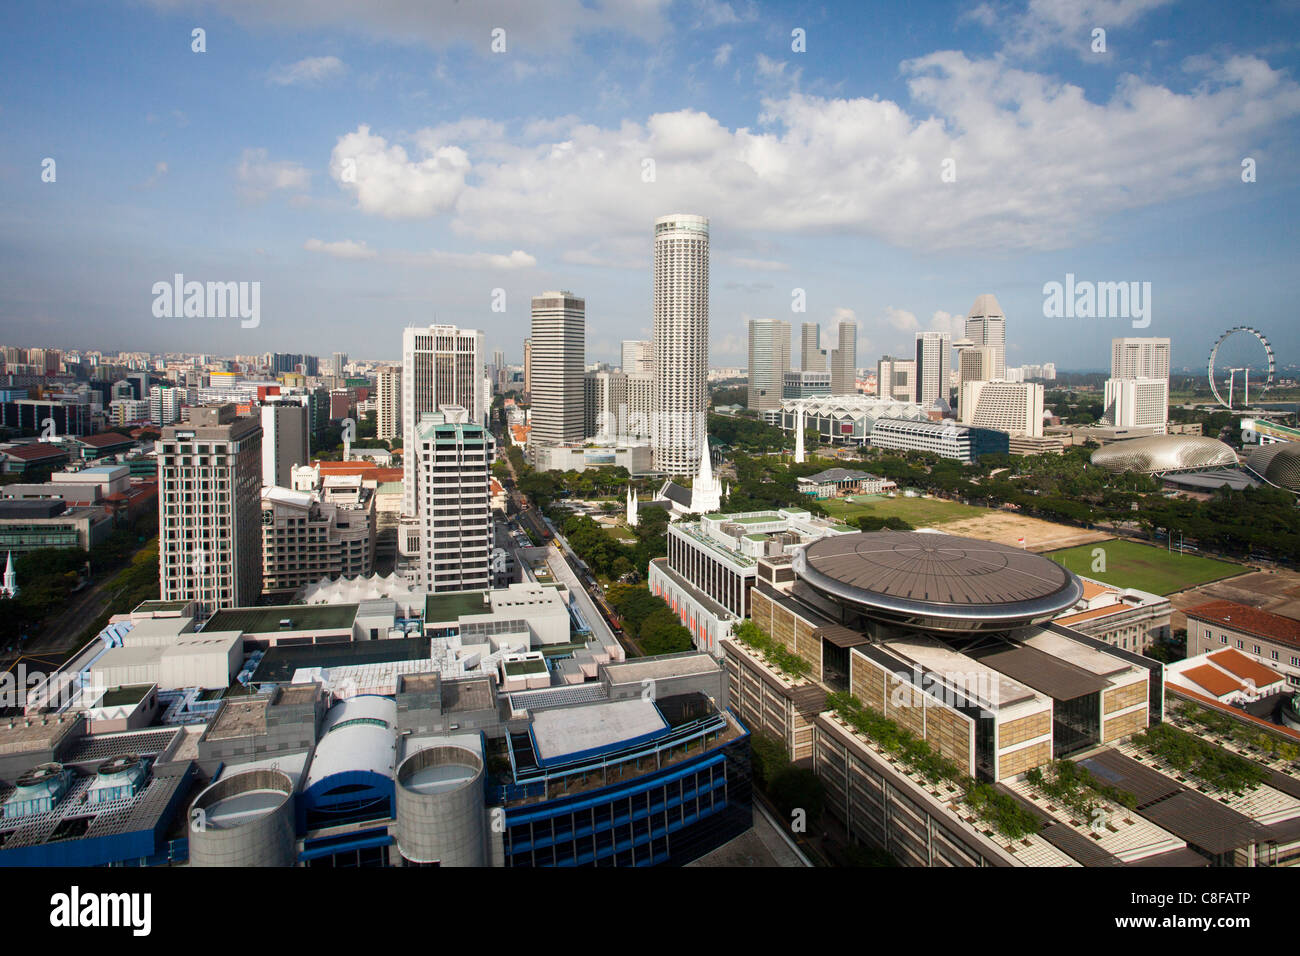 Singapore, Asia, paese, città, il più alto tribunale di legge, panoramica, Skyline, look, vista da sopra Foto Stock